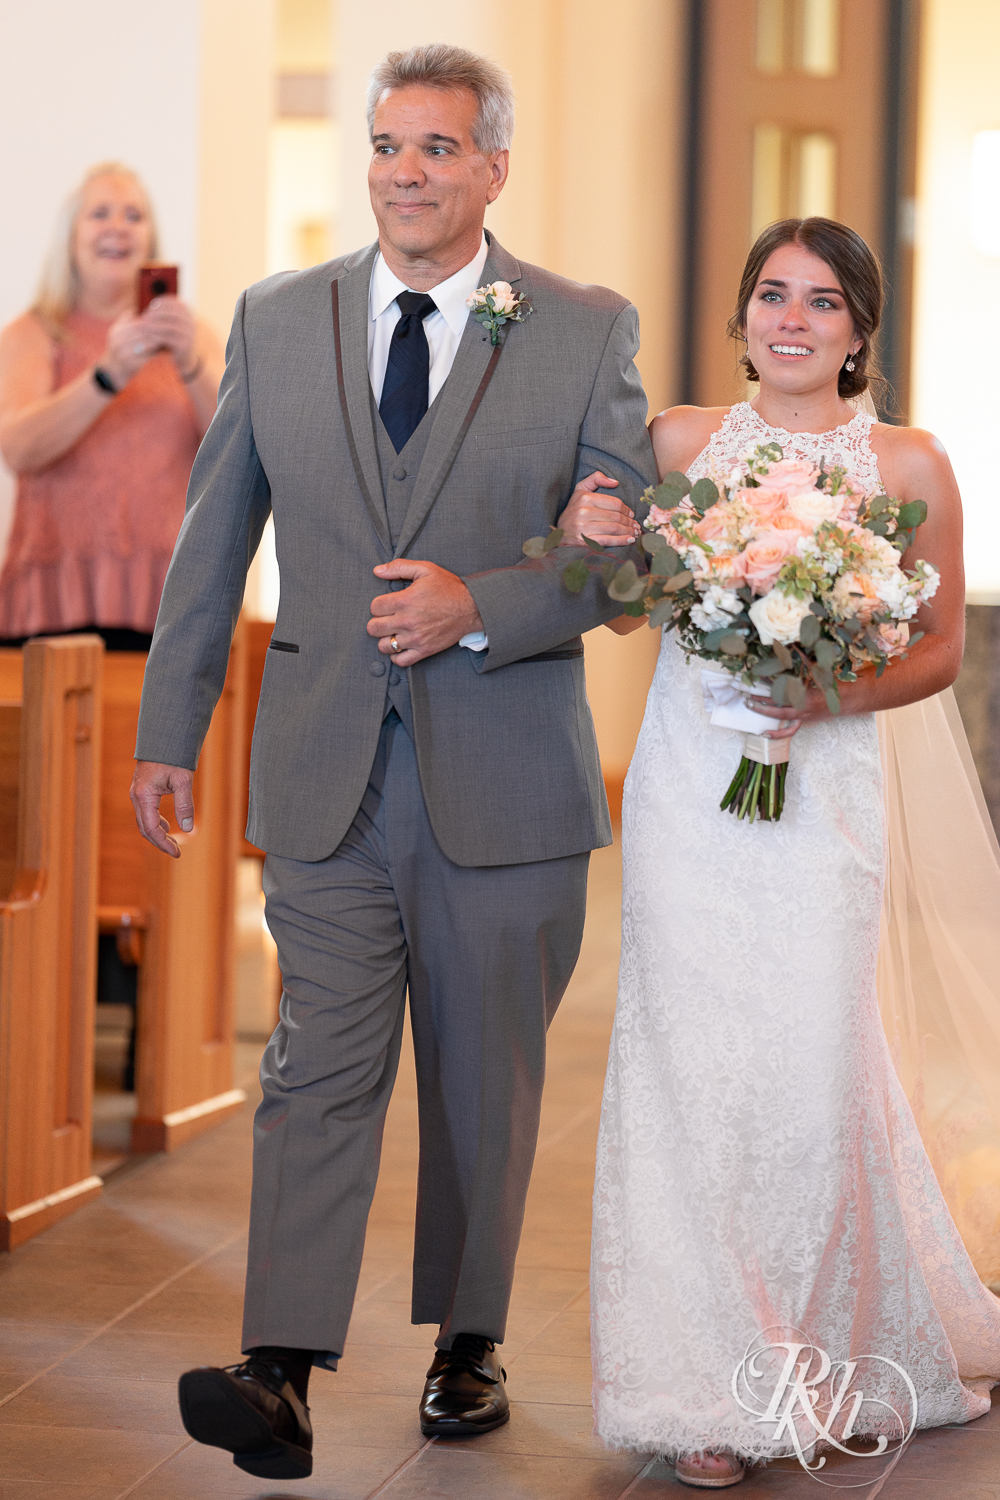 Bride walking down the aisle with father at Saint Joseph Catholic Church in Rosemount, Minnesota.